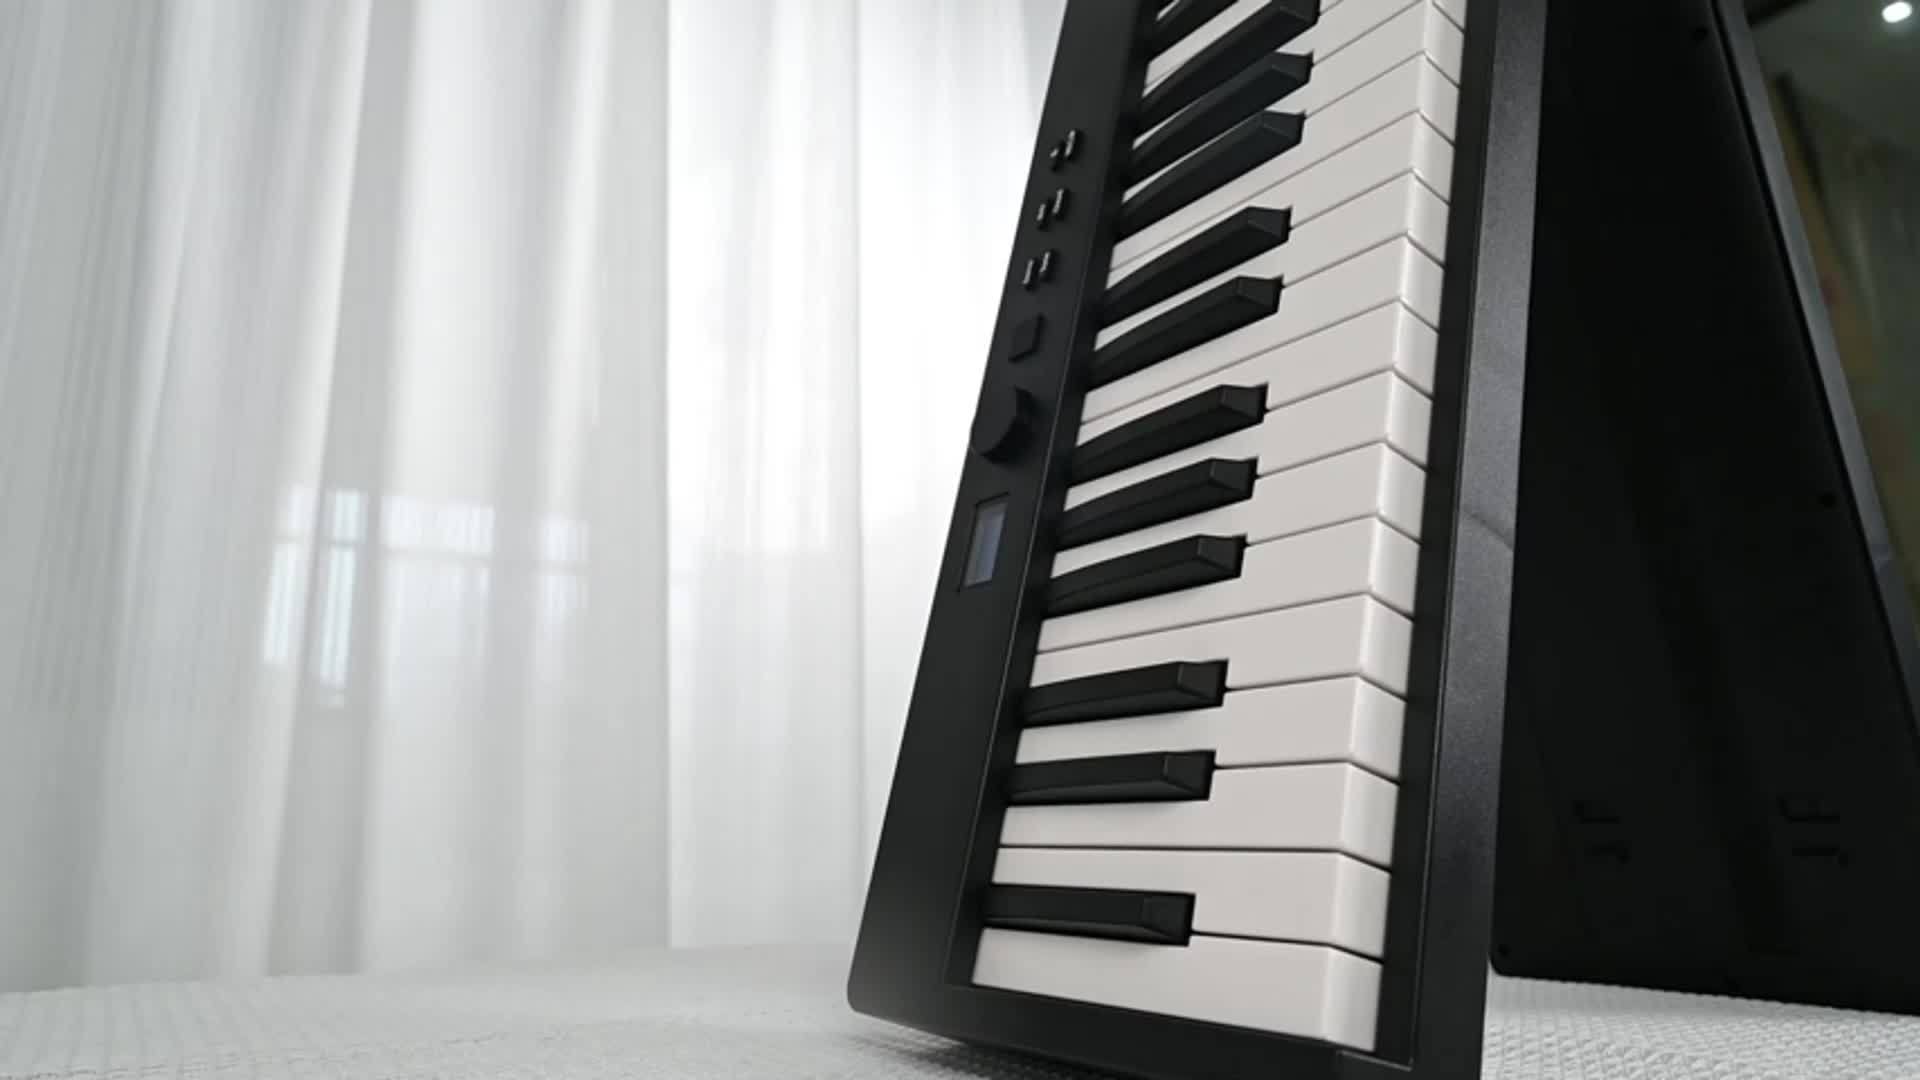 88-key Multifunctional Portable Intelligent Electronic Piano